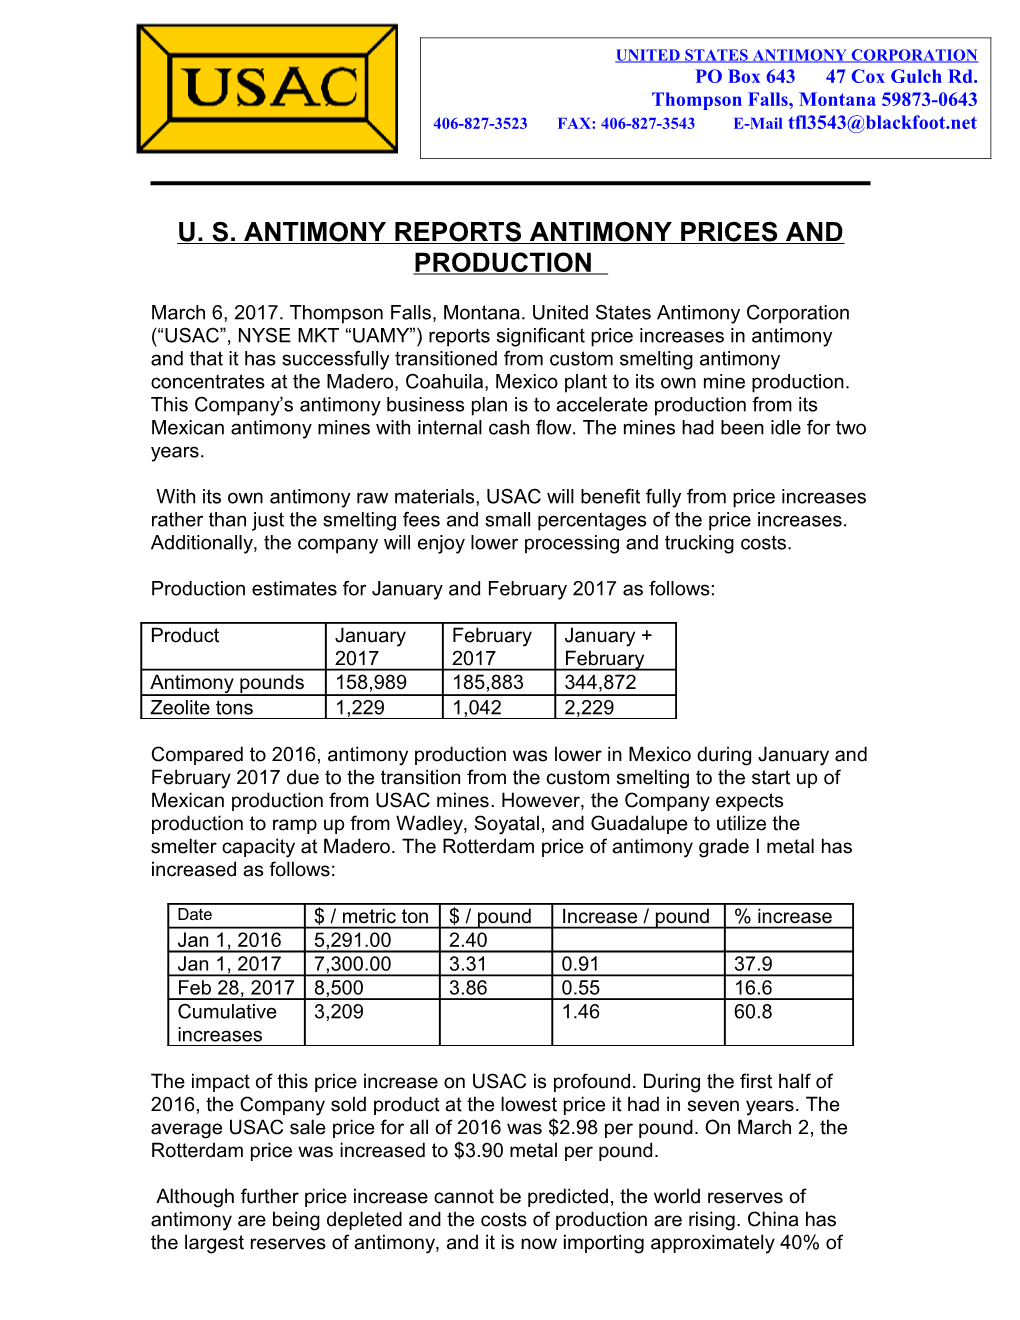 U. S. Antimony Reports Antimony Prices and Production